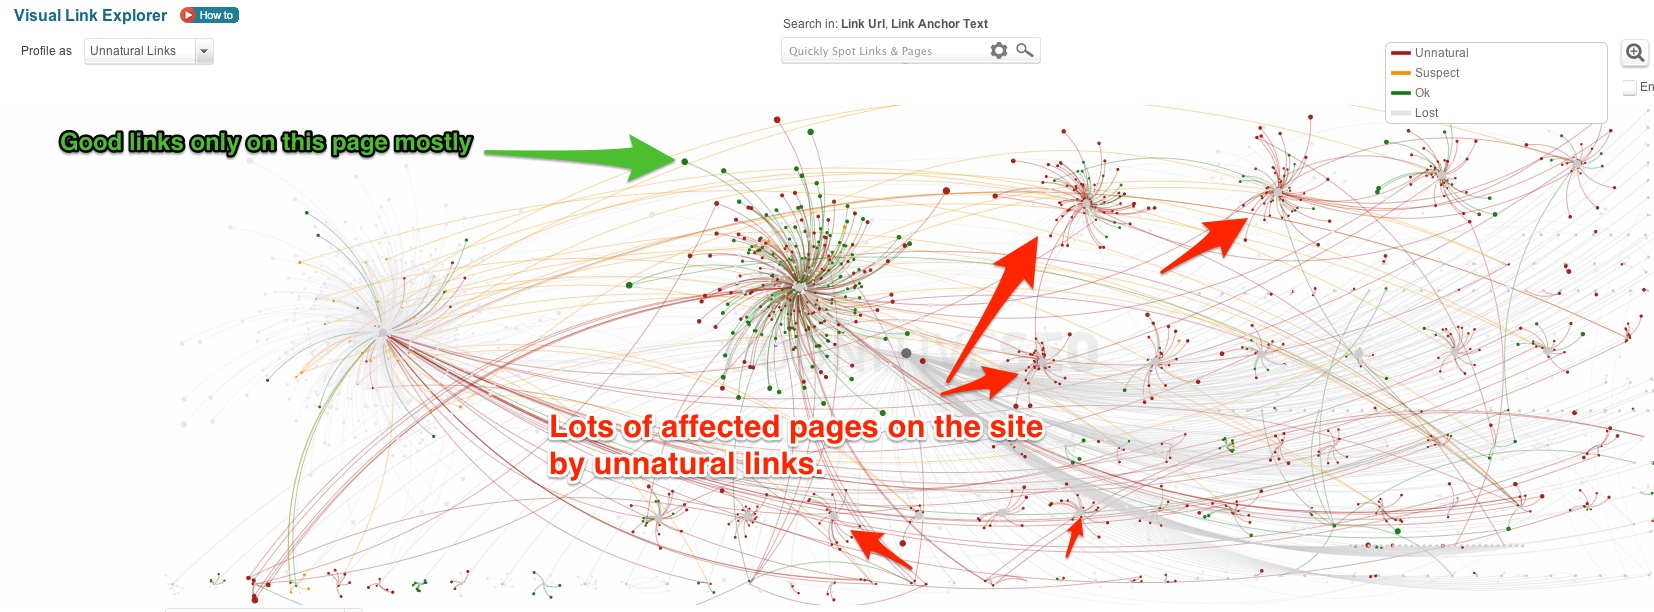 Visual Link Explorer Unnatural Links Distribution